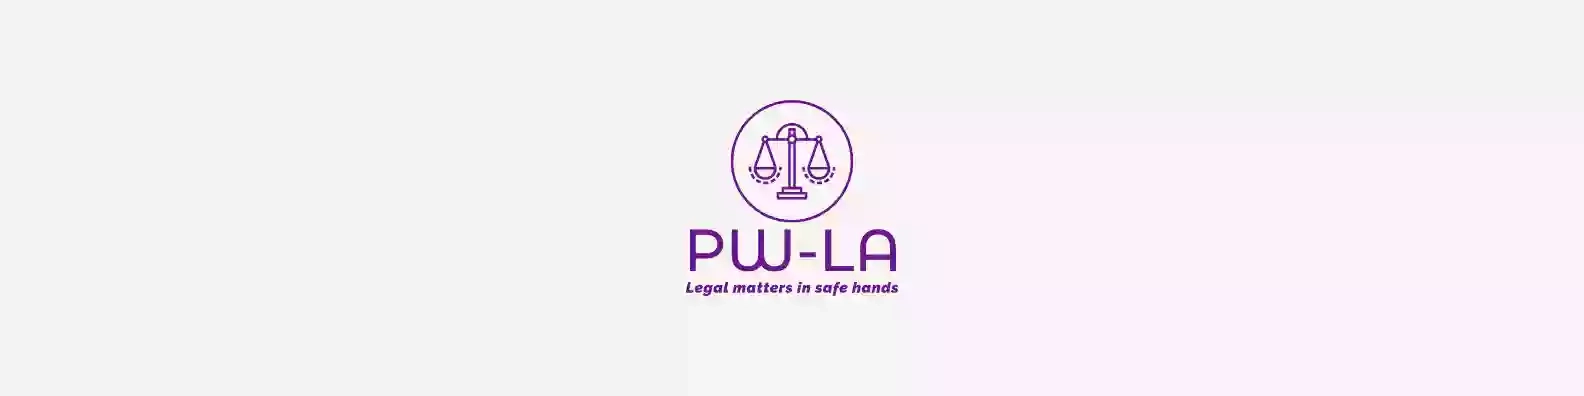 Patricia White Lawyers & Advocates Ltd